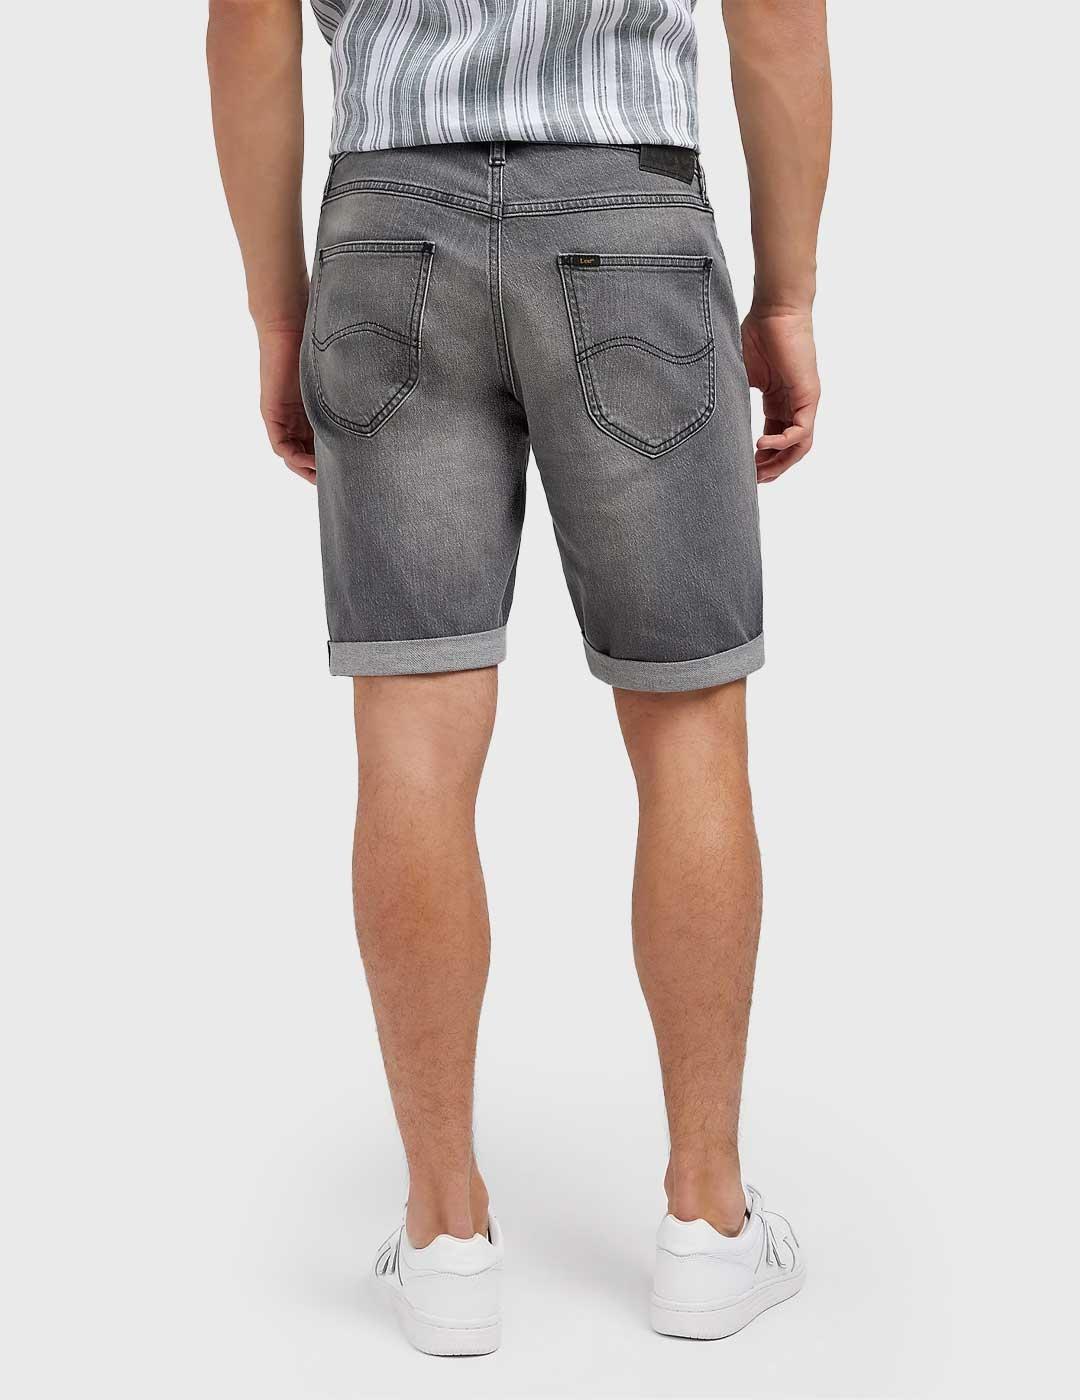 Lee Short Washed Pantalones cortos grises para hombre